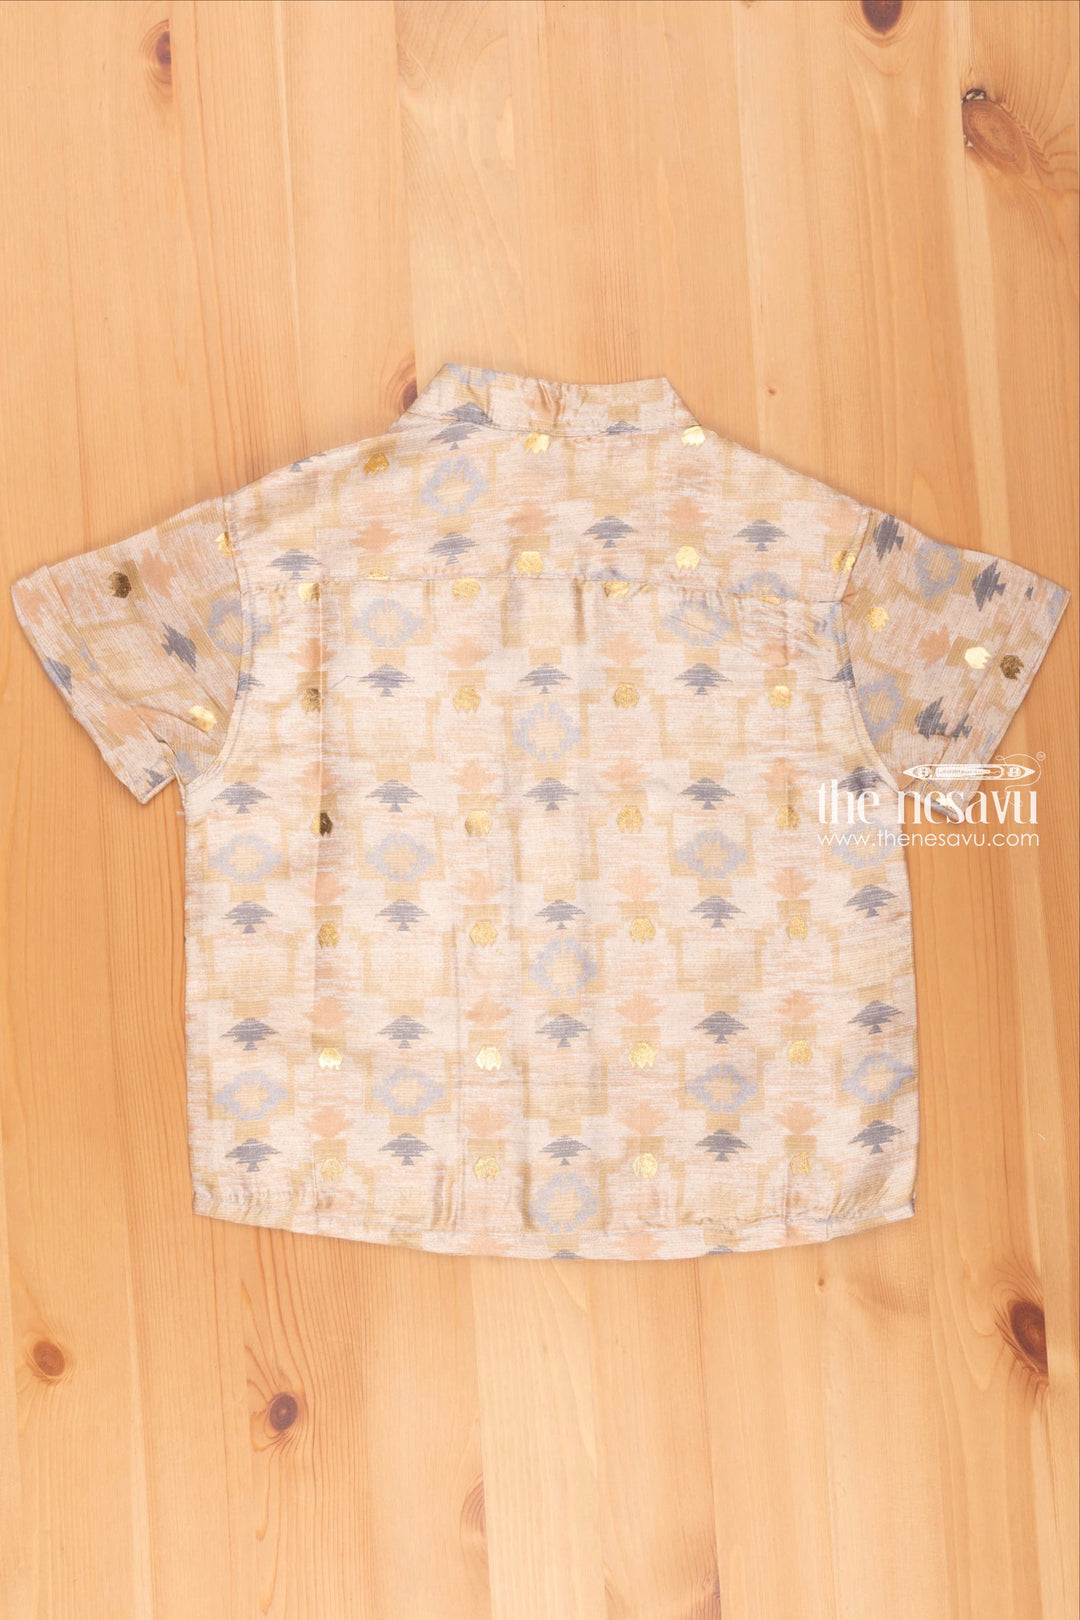 The Nesavu Boys Silk Shirt Beige Silk Shirt for Boys with Geometrical Print Nesavu 6MONTH Old Girl Frock | Baby Clothes Online | the Nesavu